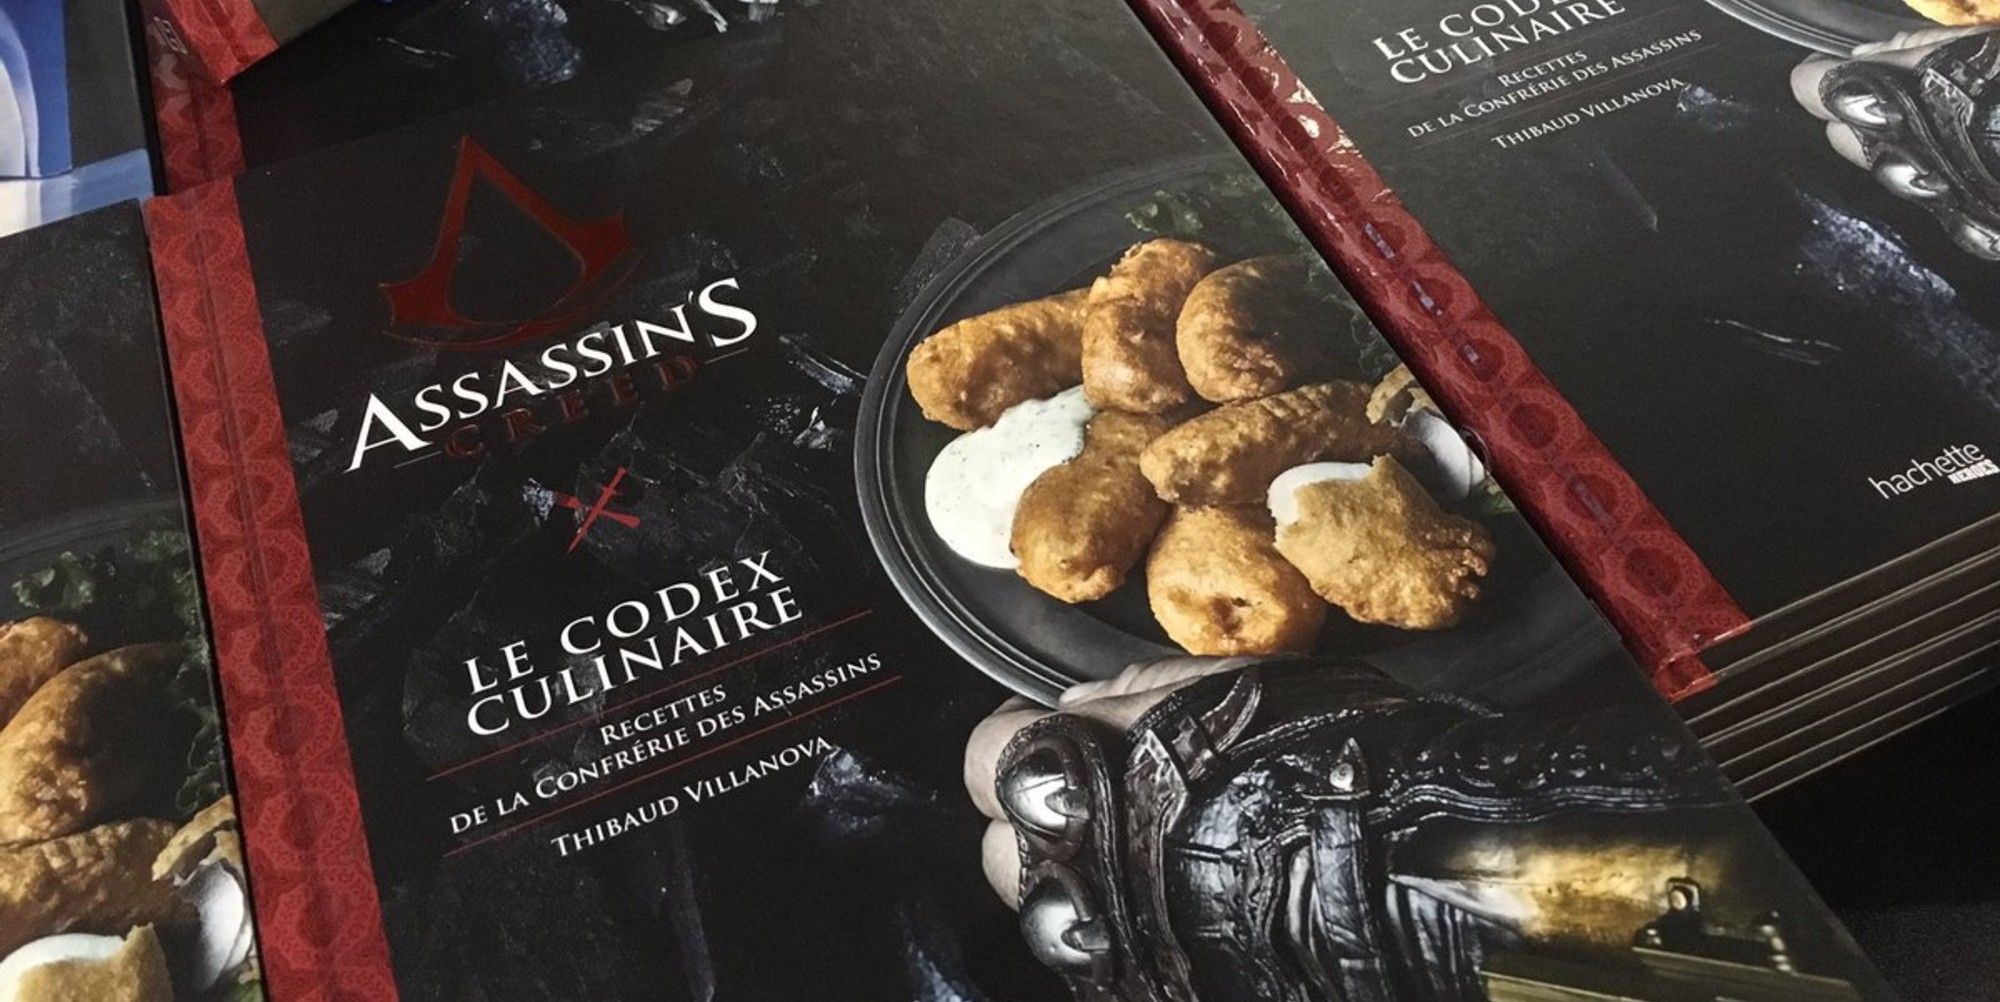 Assassins Creed Culinary Codex (1)